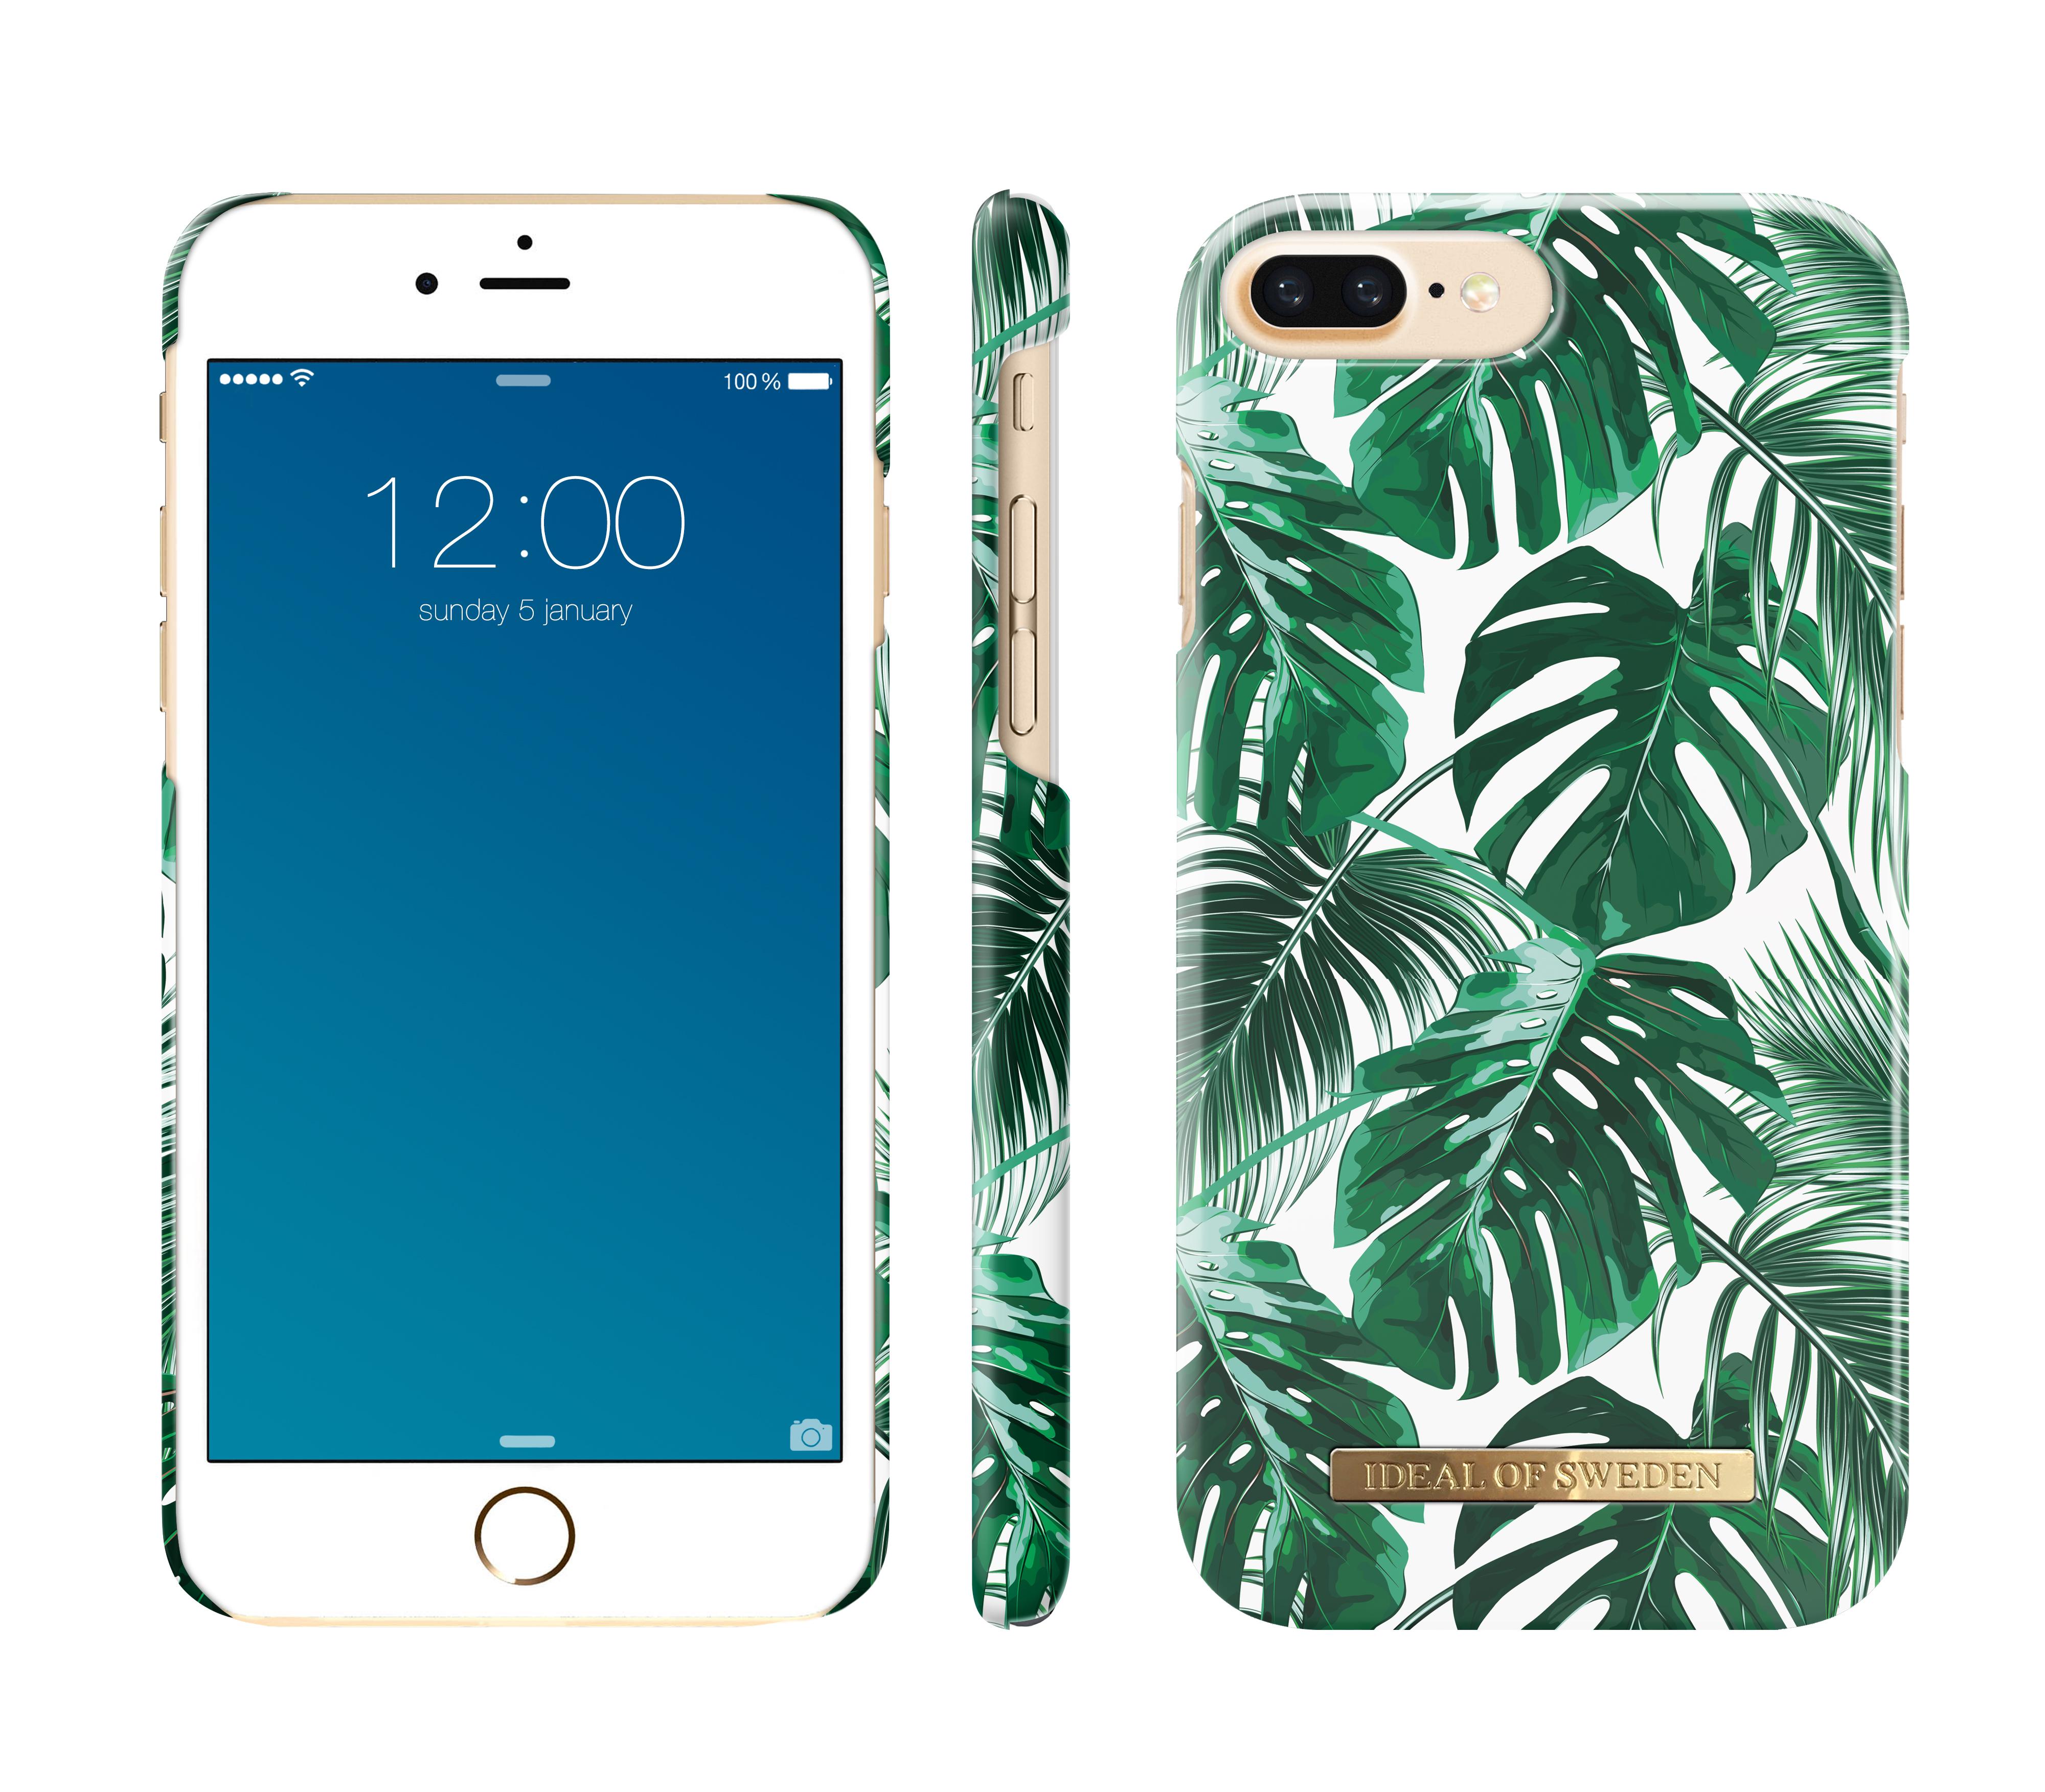 Fashion Case iPhone 7 Plus/8 Plus Monstera Jungle